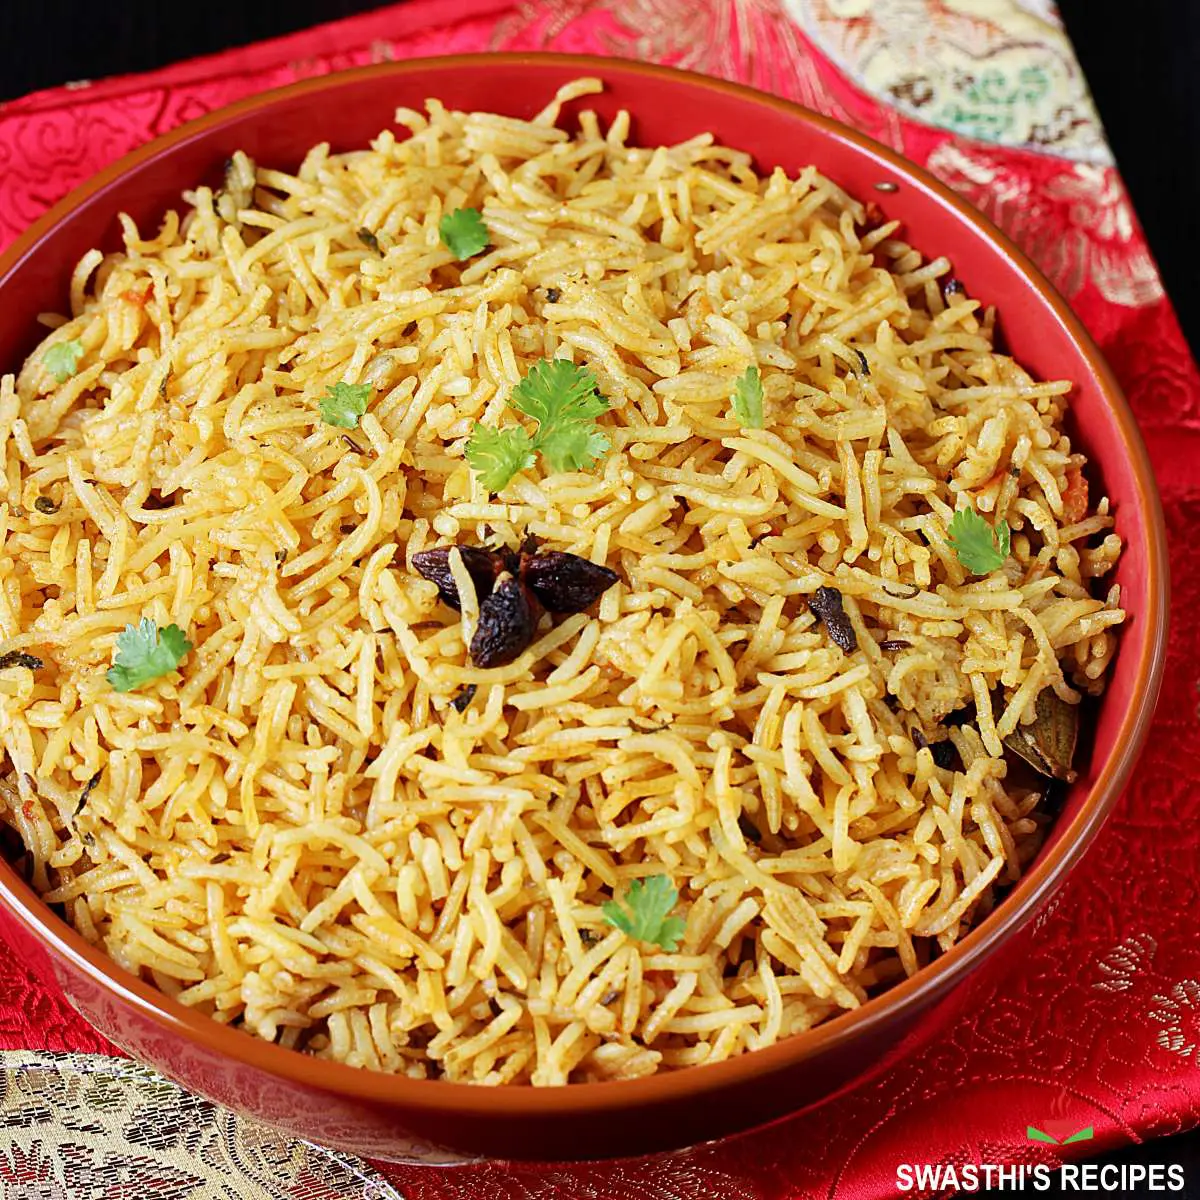 Biryani Rice also known as Kuska in South India